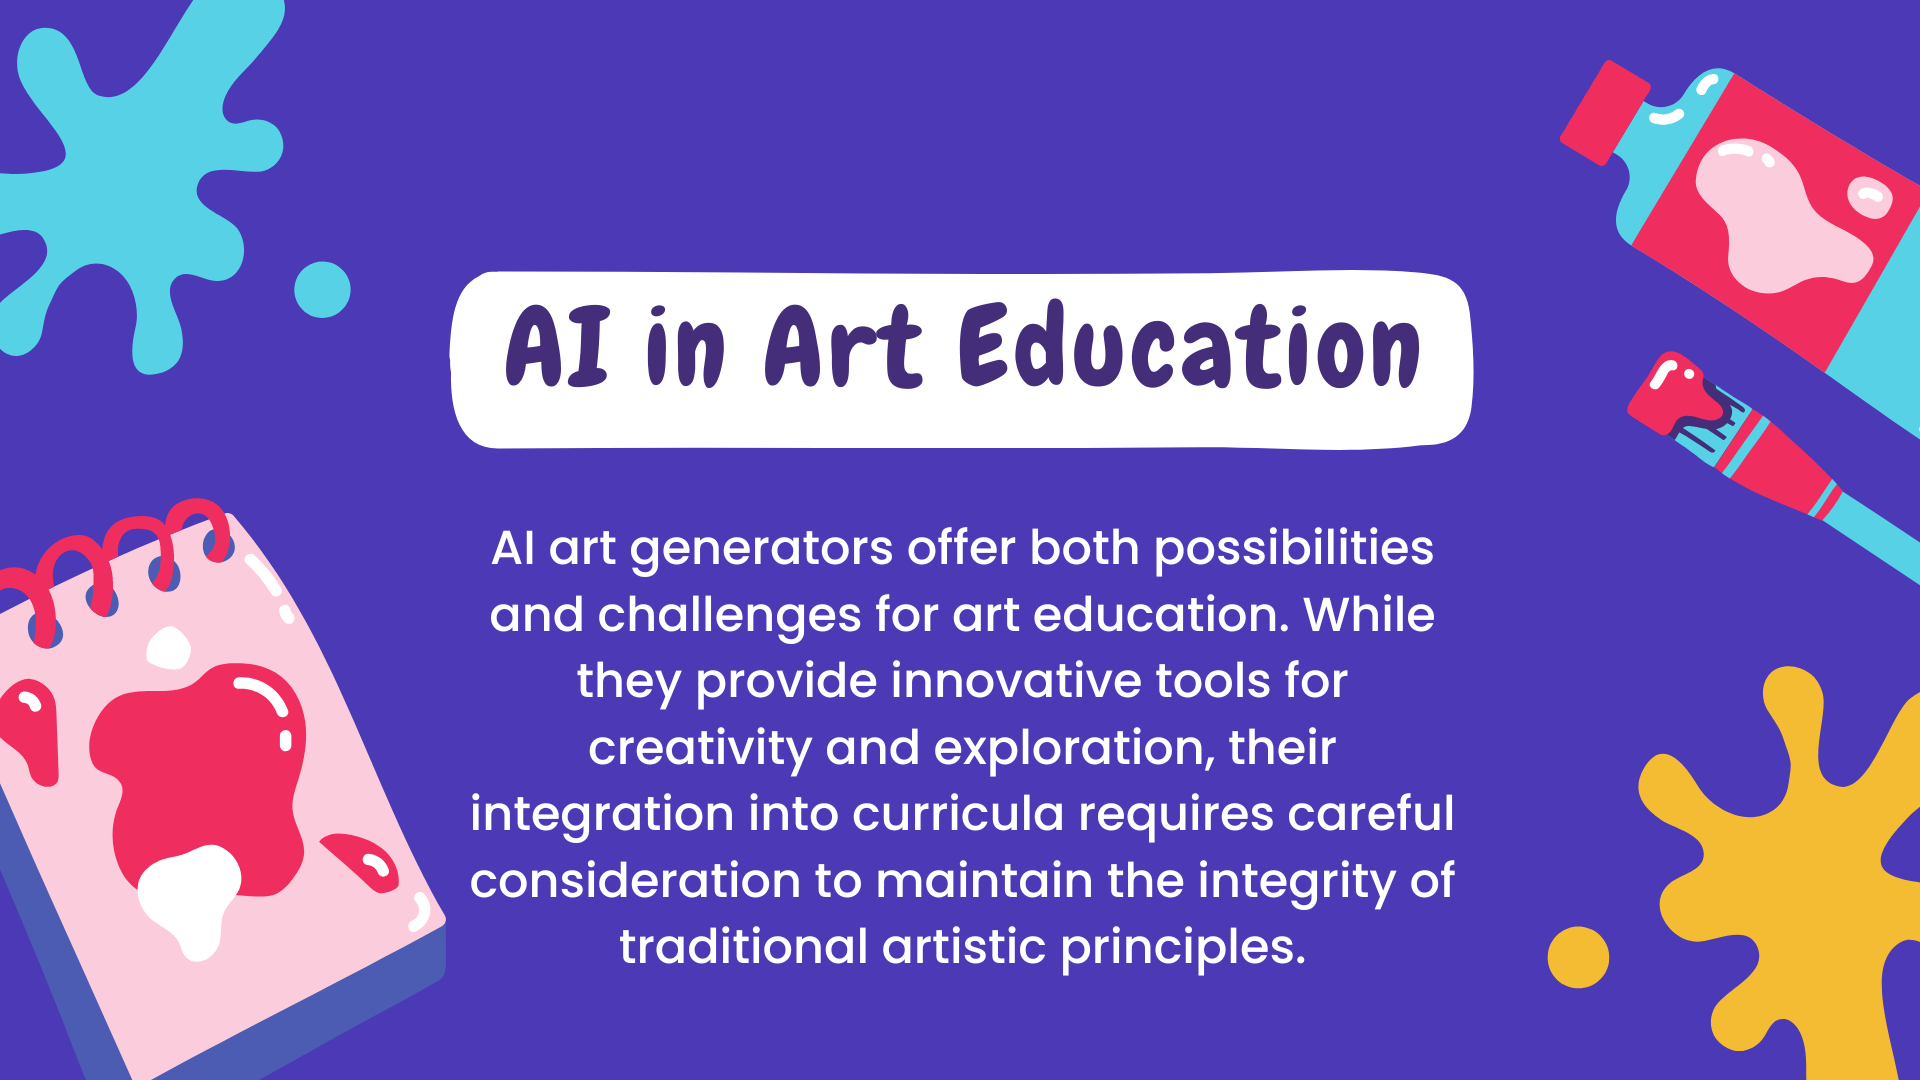 ai art's impact on art education